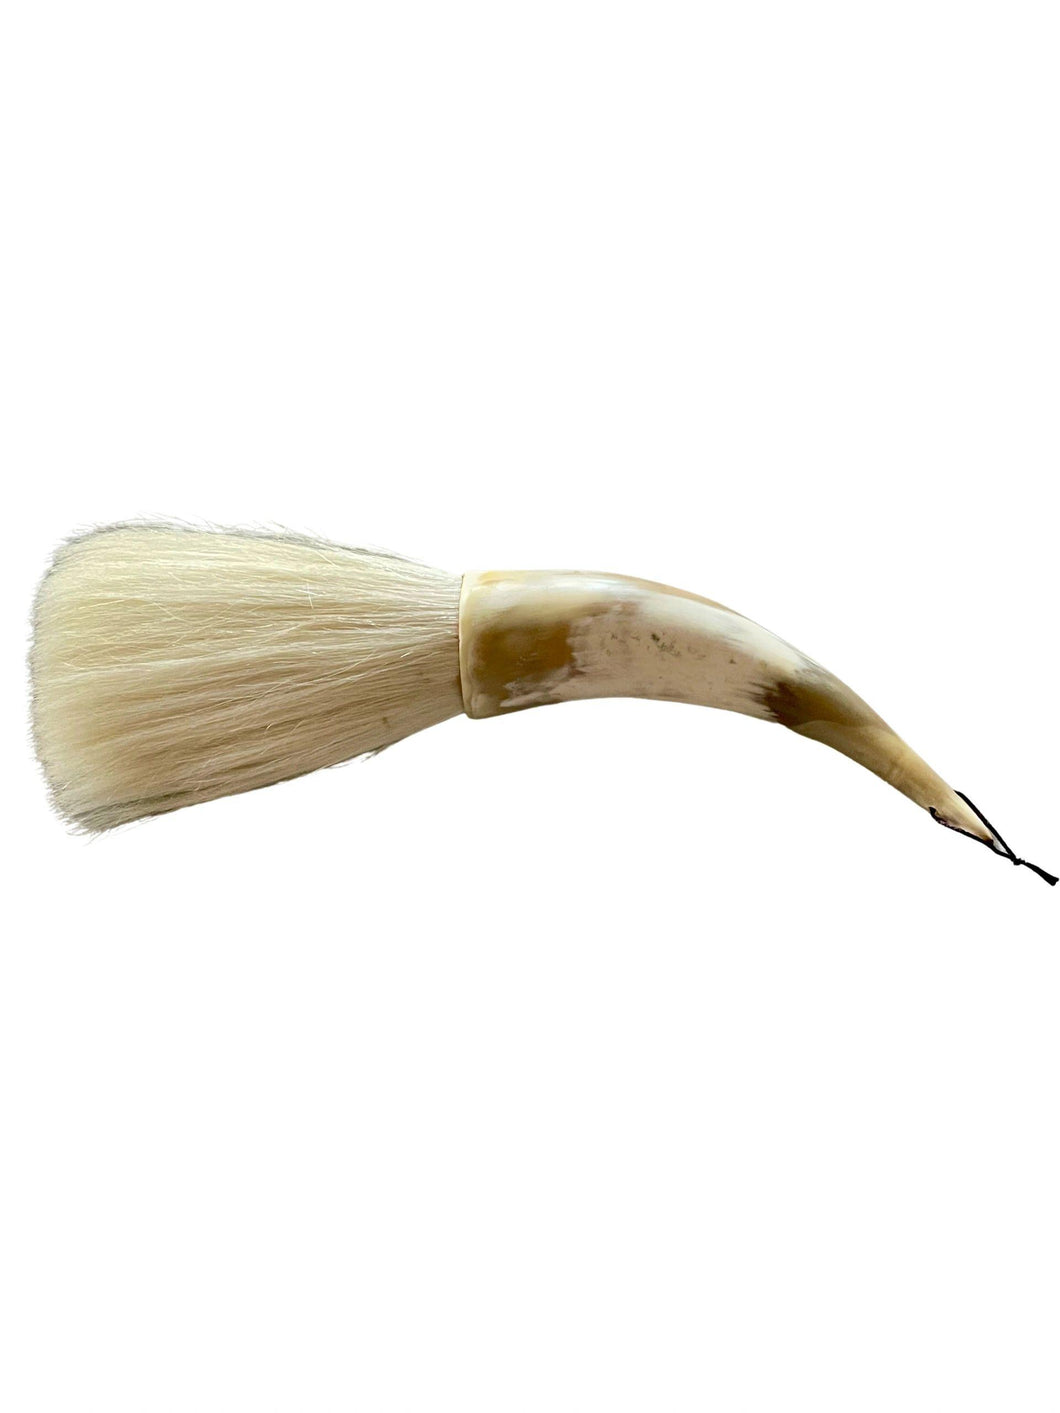 Calligraphy Brush, Horn & Cashmere Goat Hair